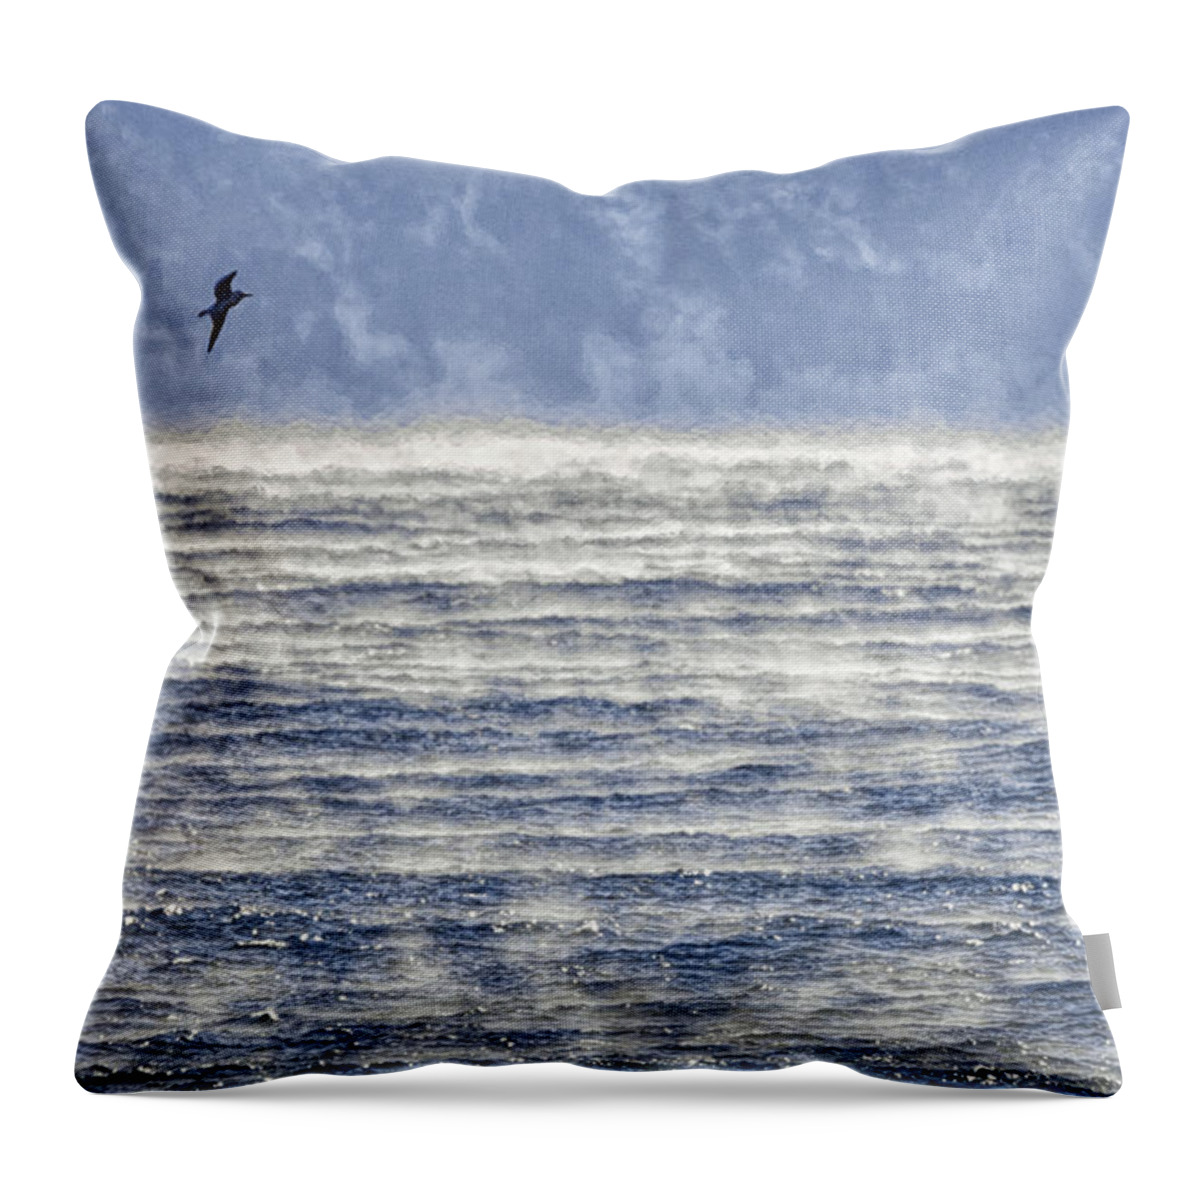 Sea Smoke And Gull Blues Throw Pillow featuring the photograph Sea Smoke and Gull Blues by Marty Saccone